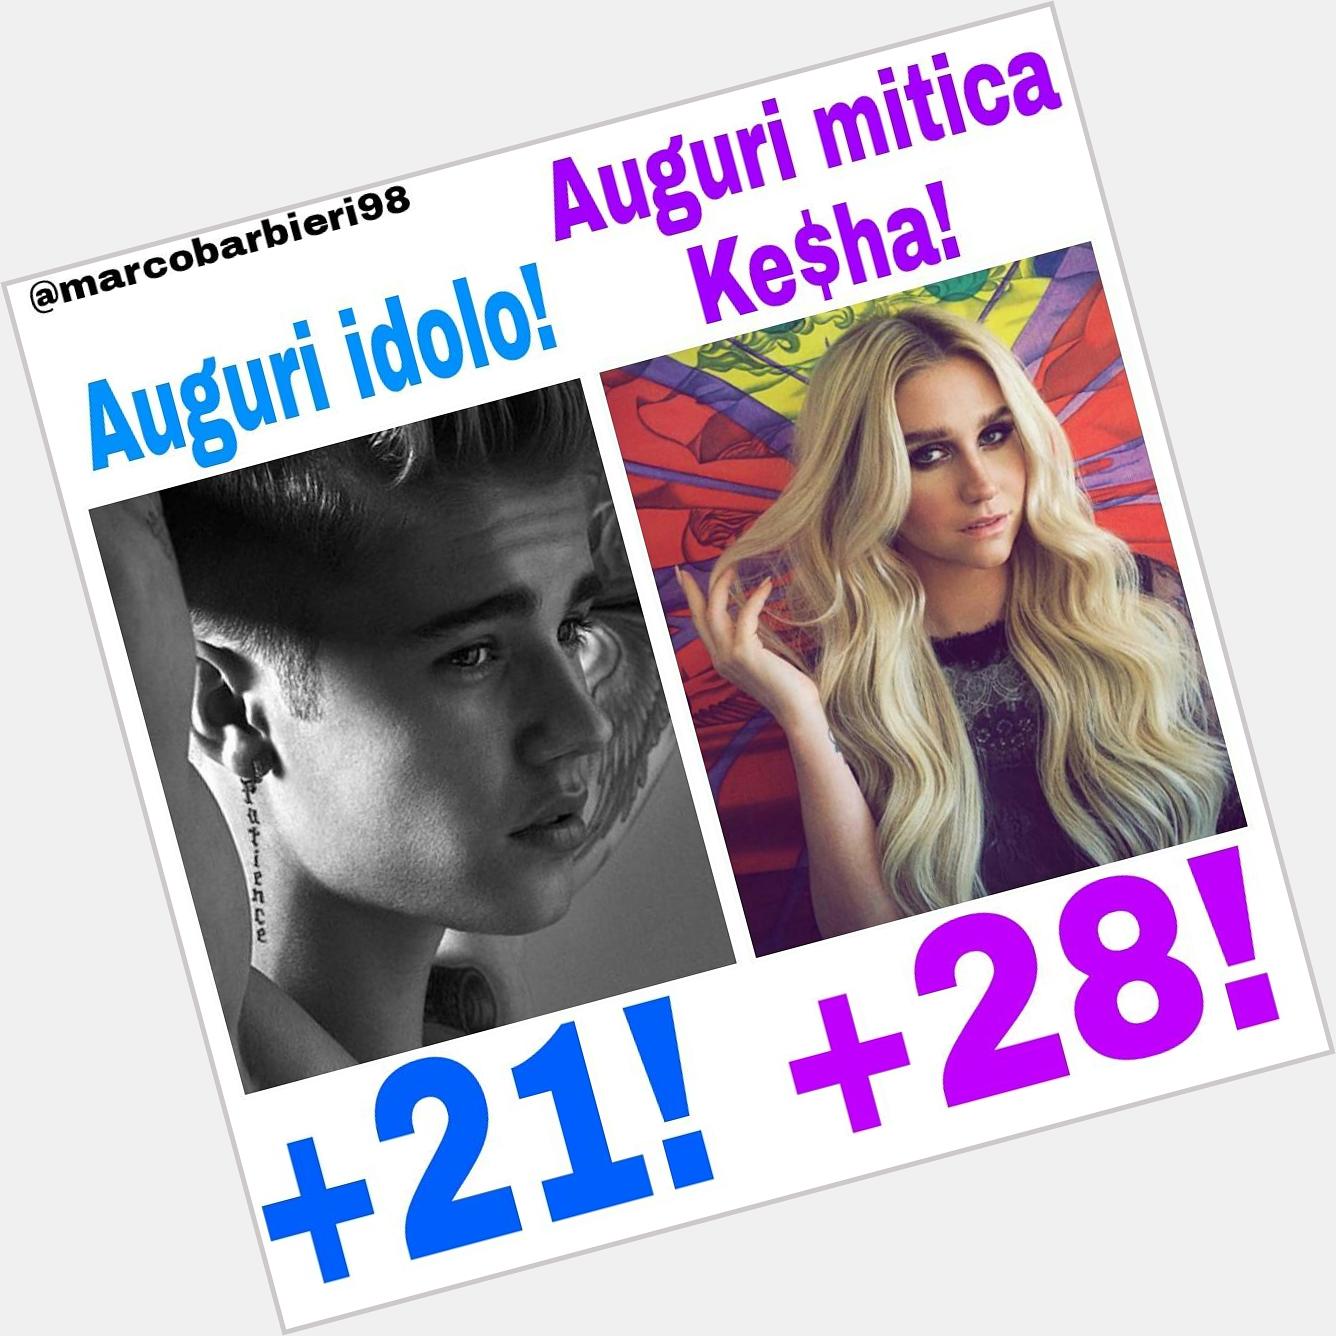   happy birthday to Justin Bieber and Kesha!!  